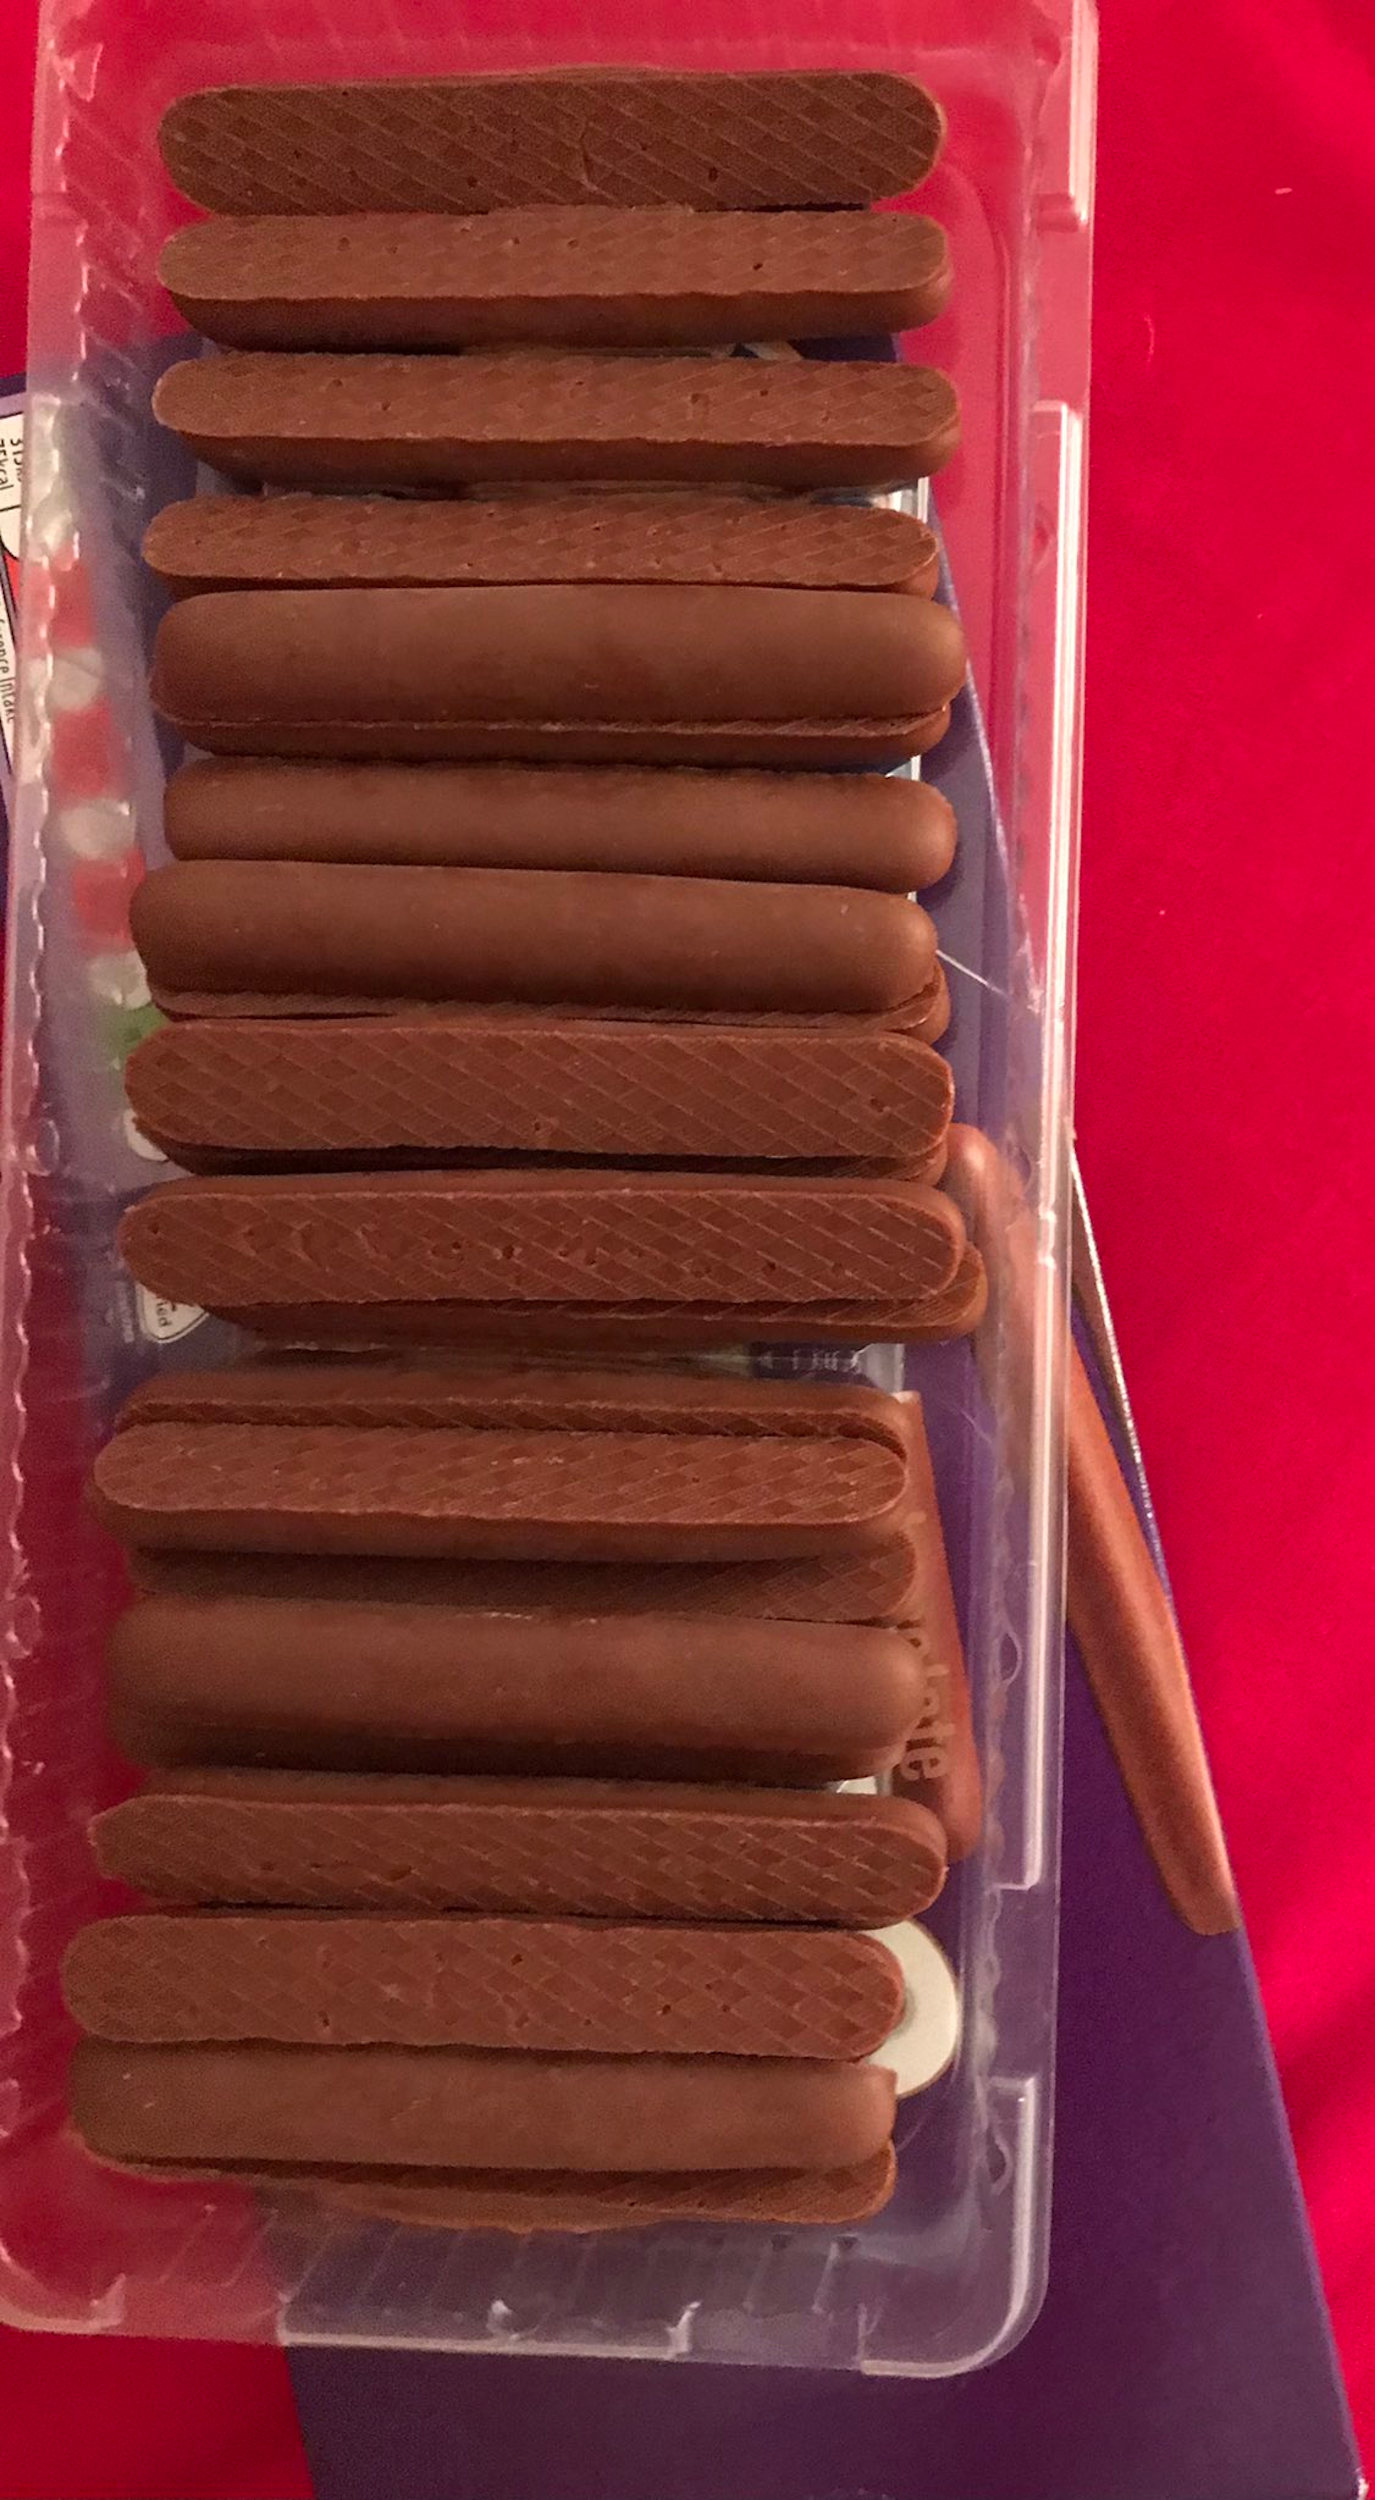 Cadbury chocolate fingers float - Viral News